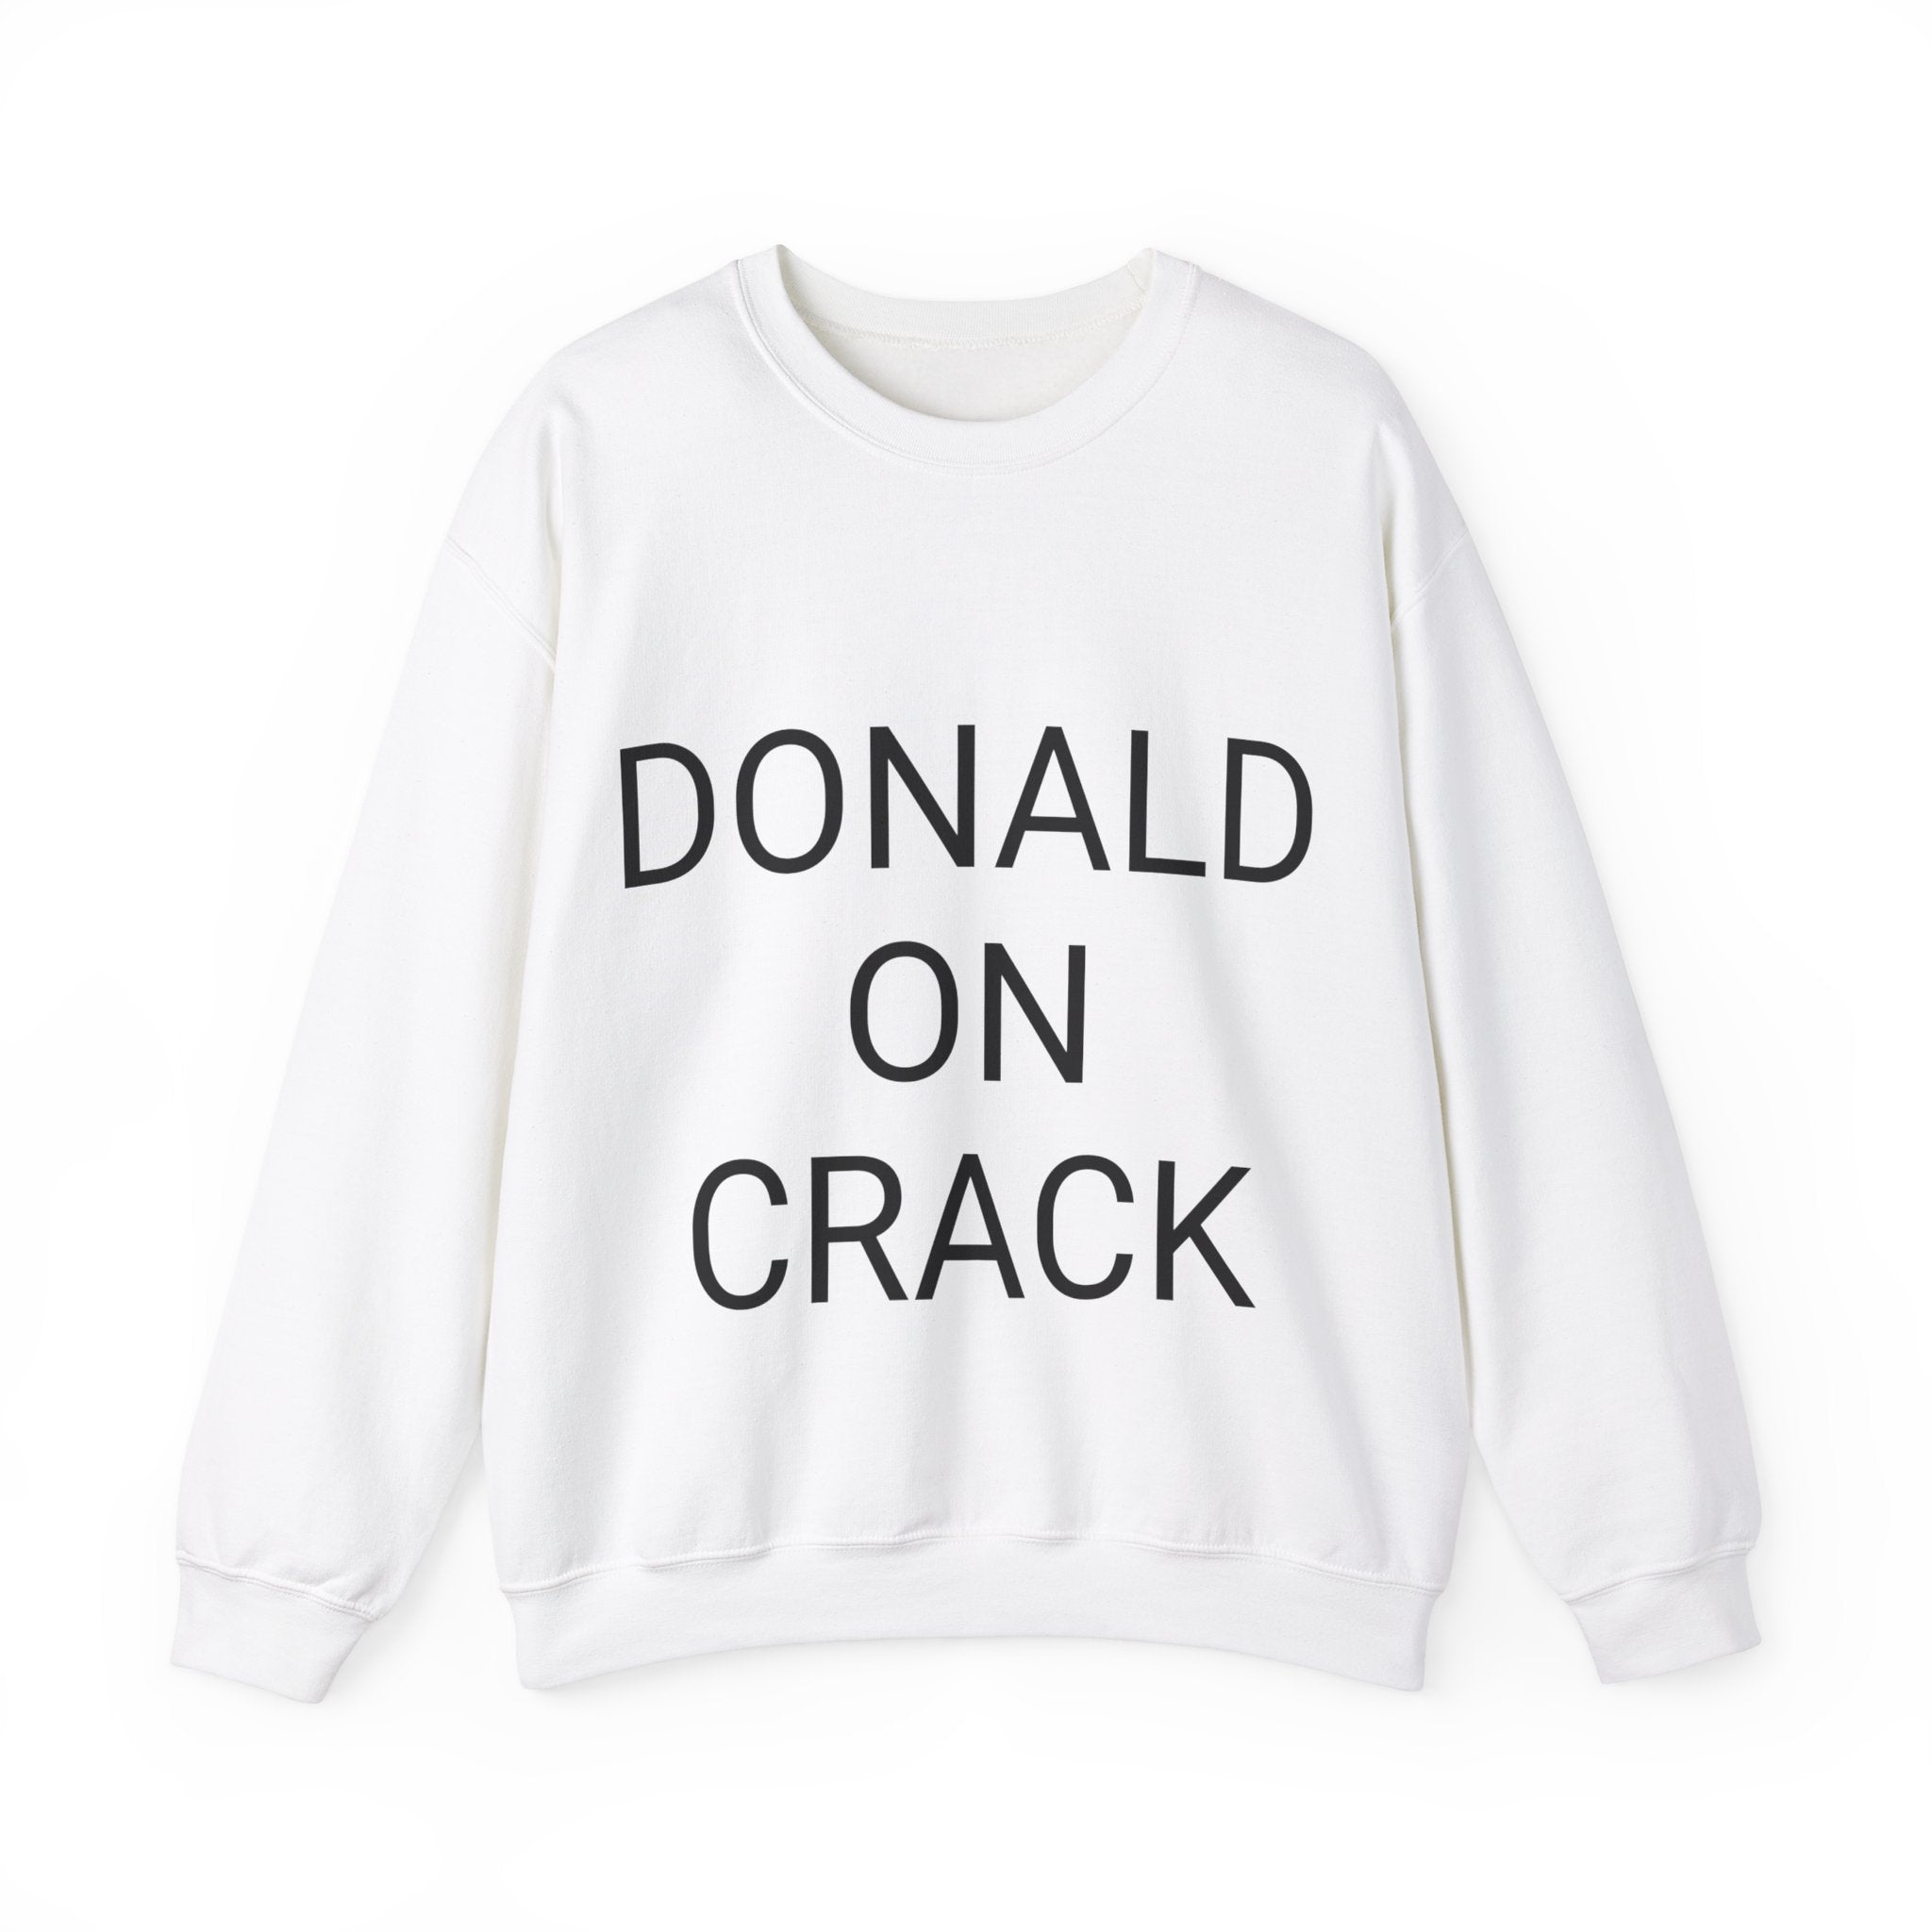 "DONALD ON CRACK" Sweatshirt